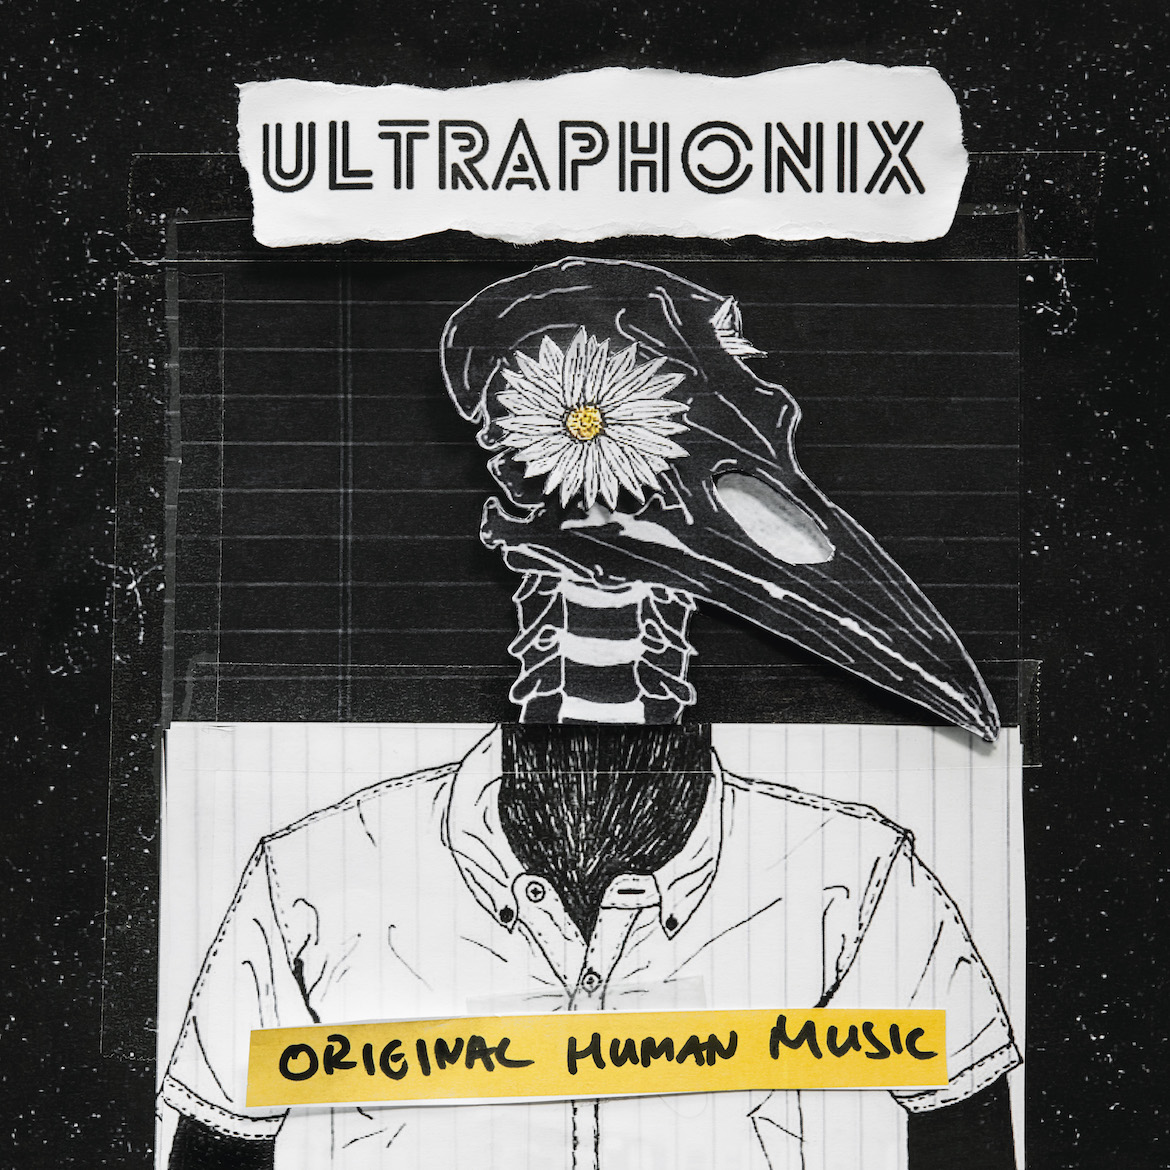 Original Human Music Album Cover by Ultraphonix